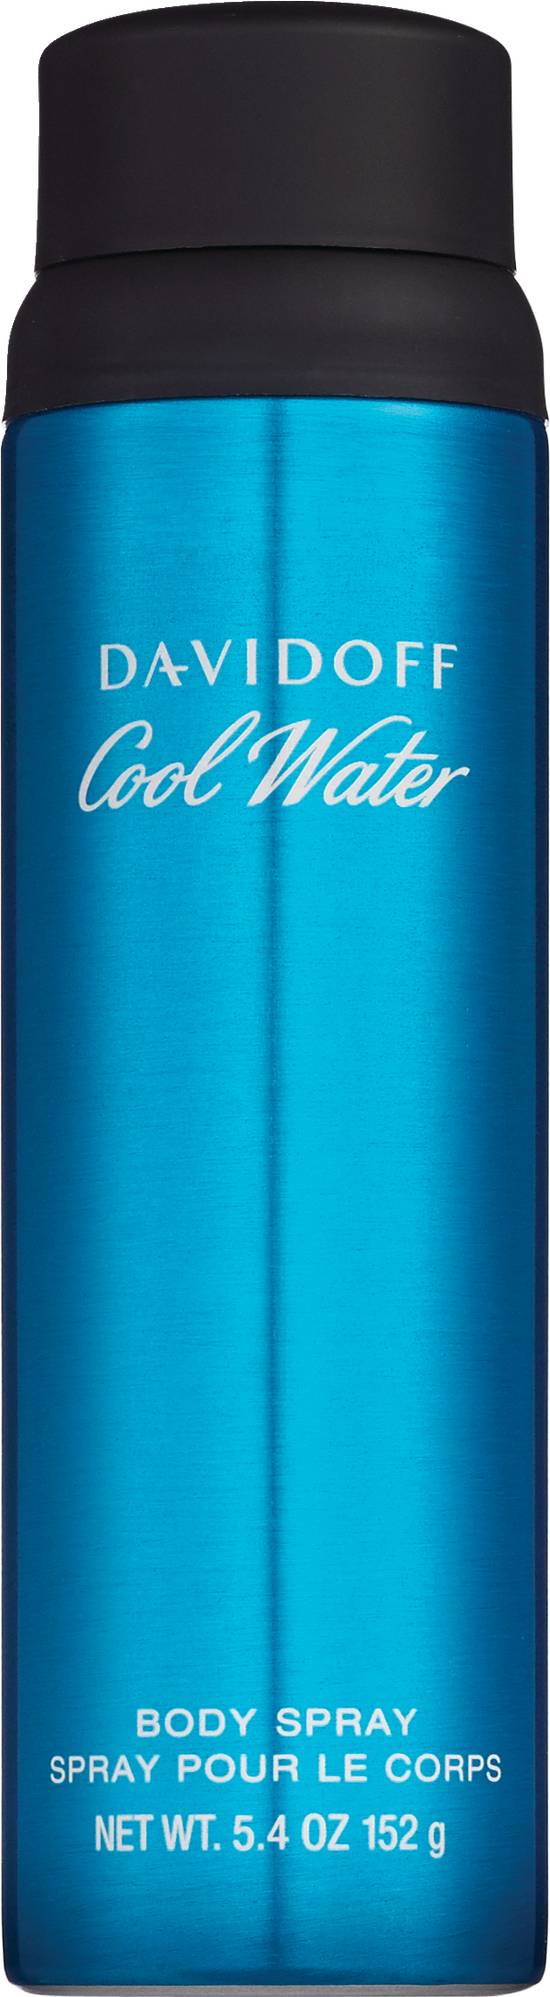 Davidoff Cool Water Body Spray, 5.4 OZ